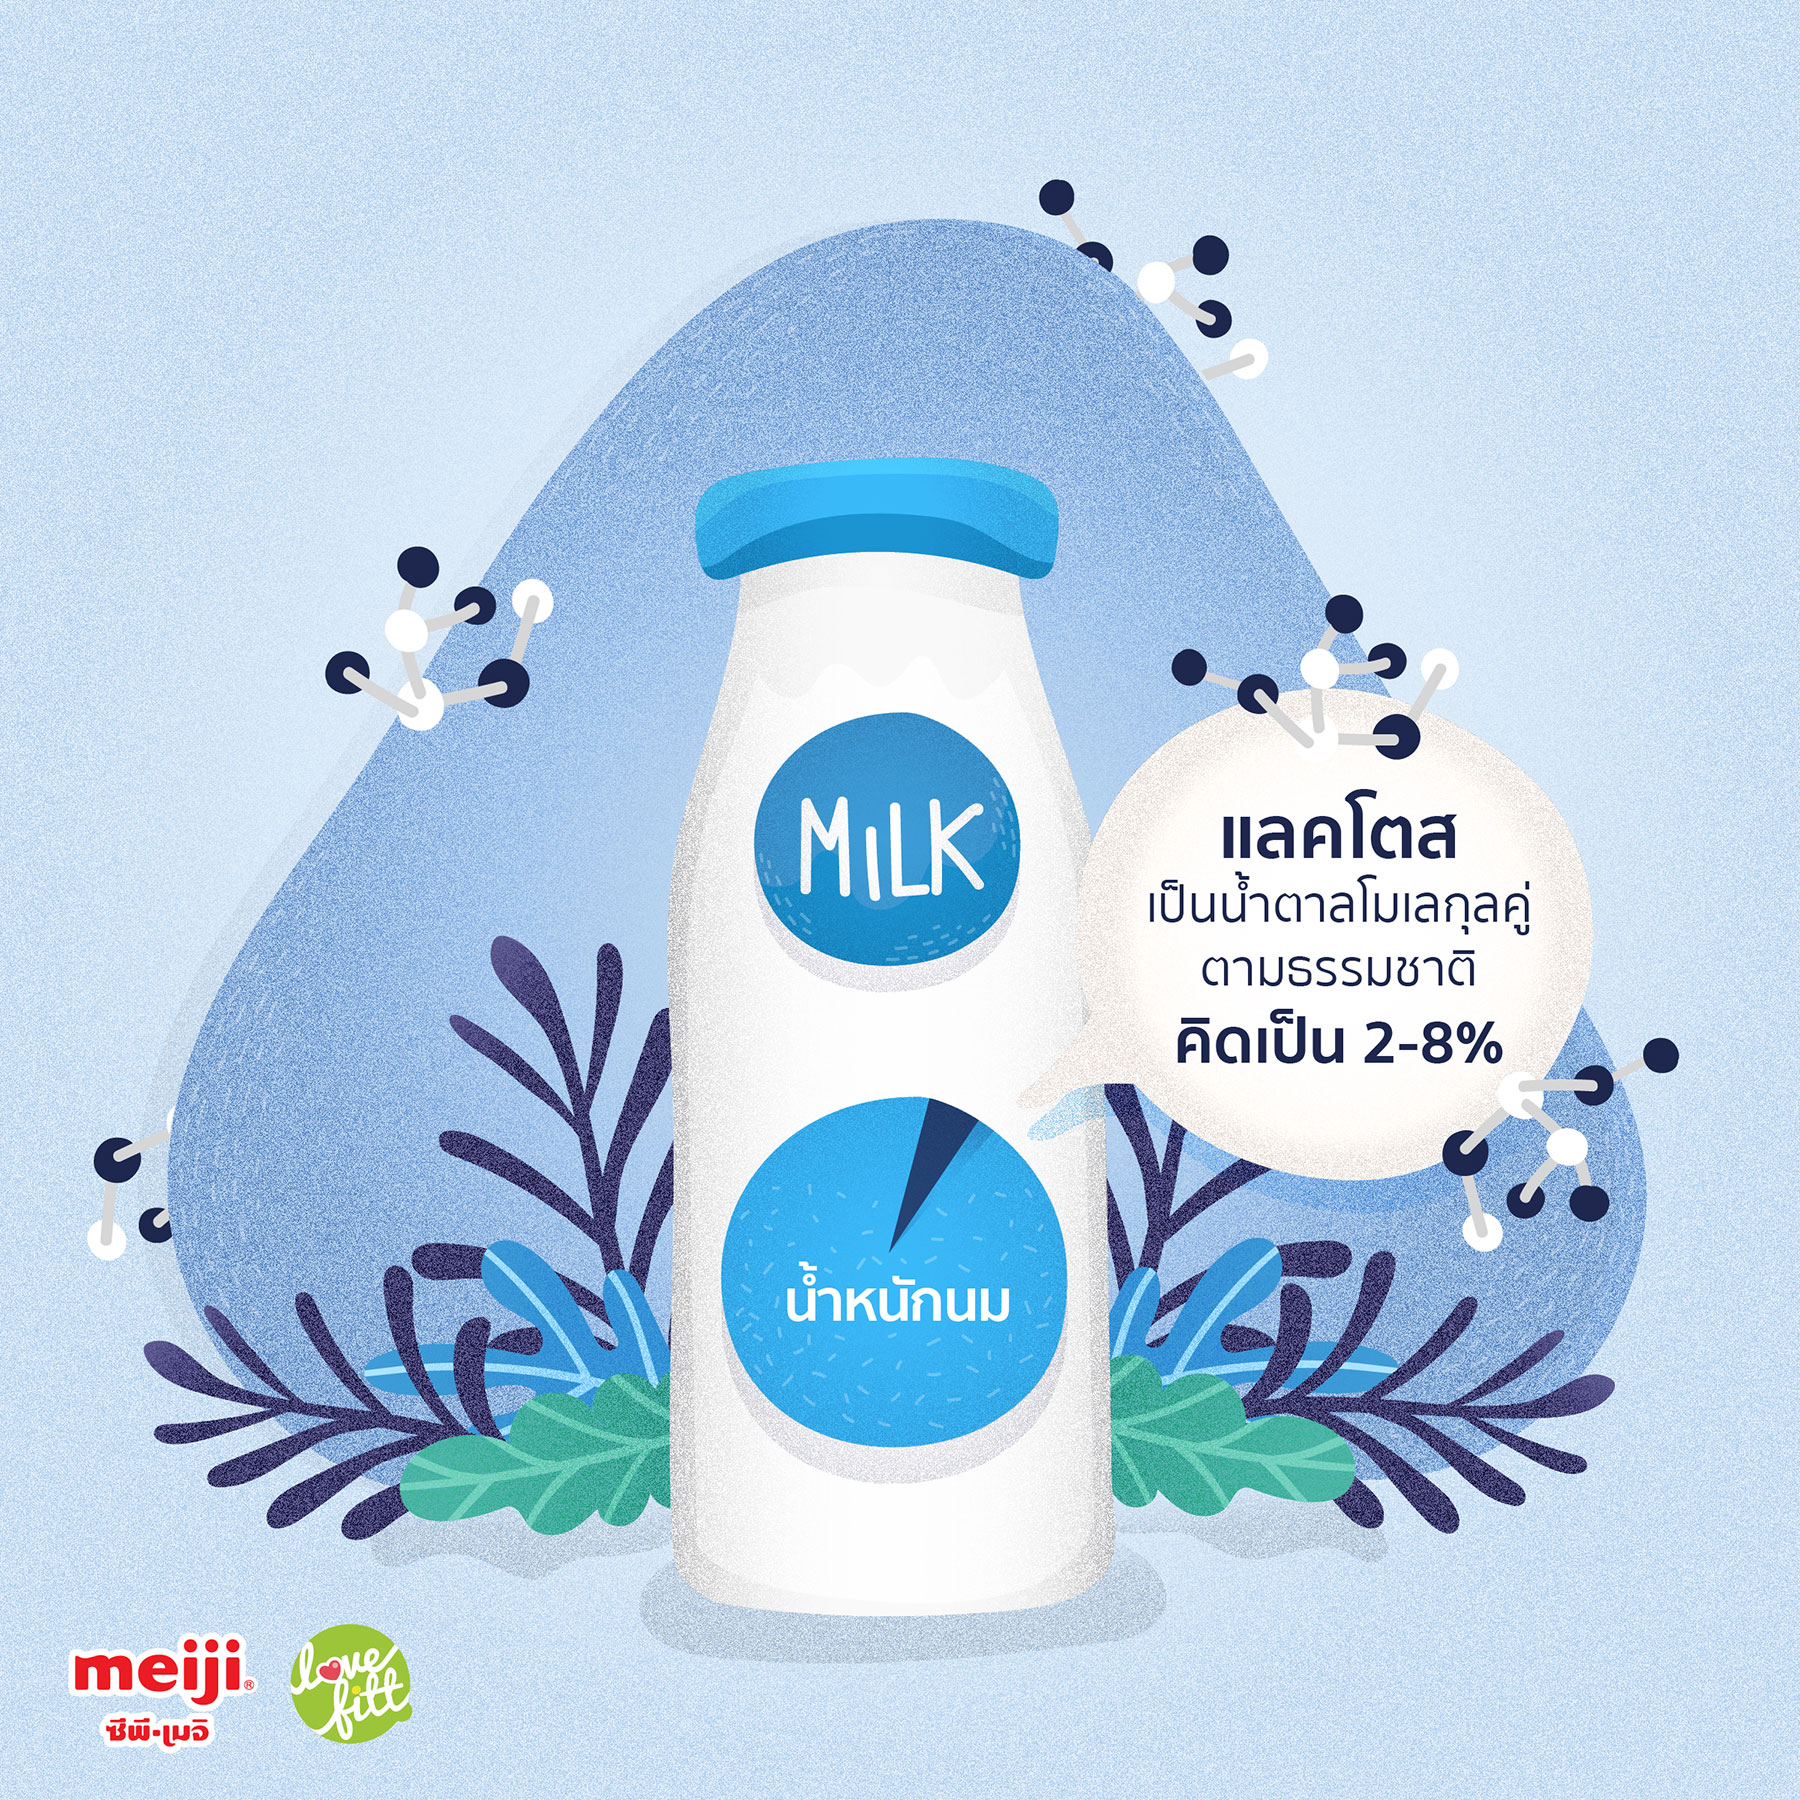 meiji-lactose-free-milk-img-04